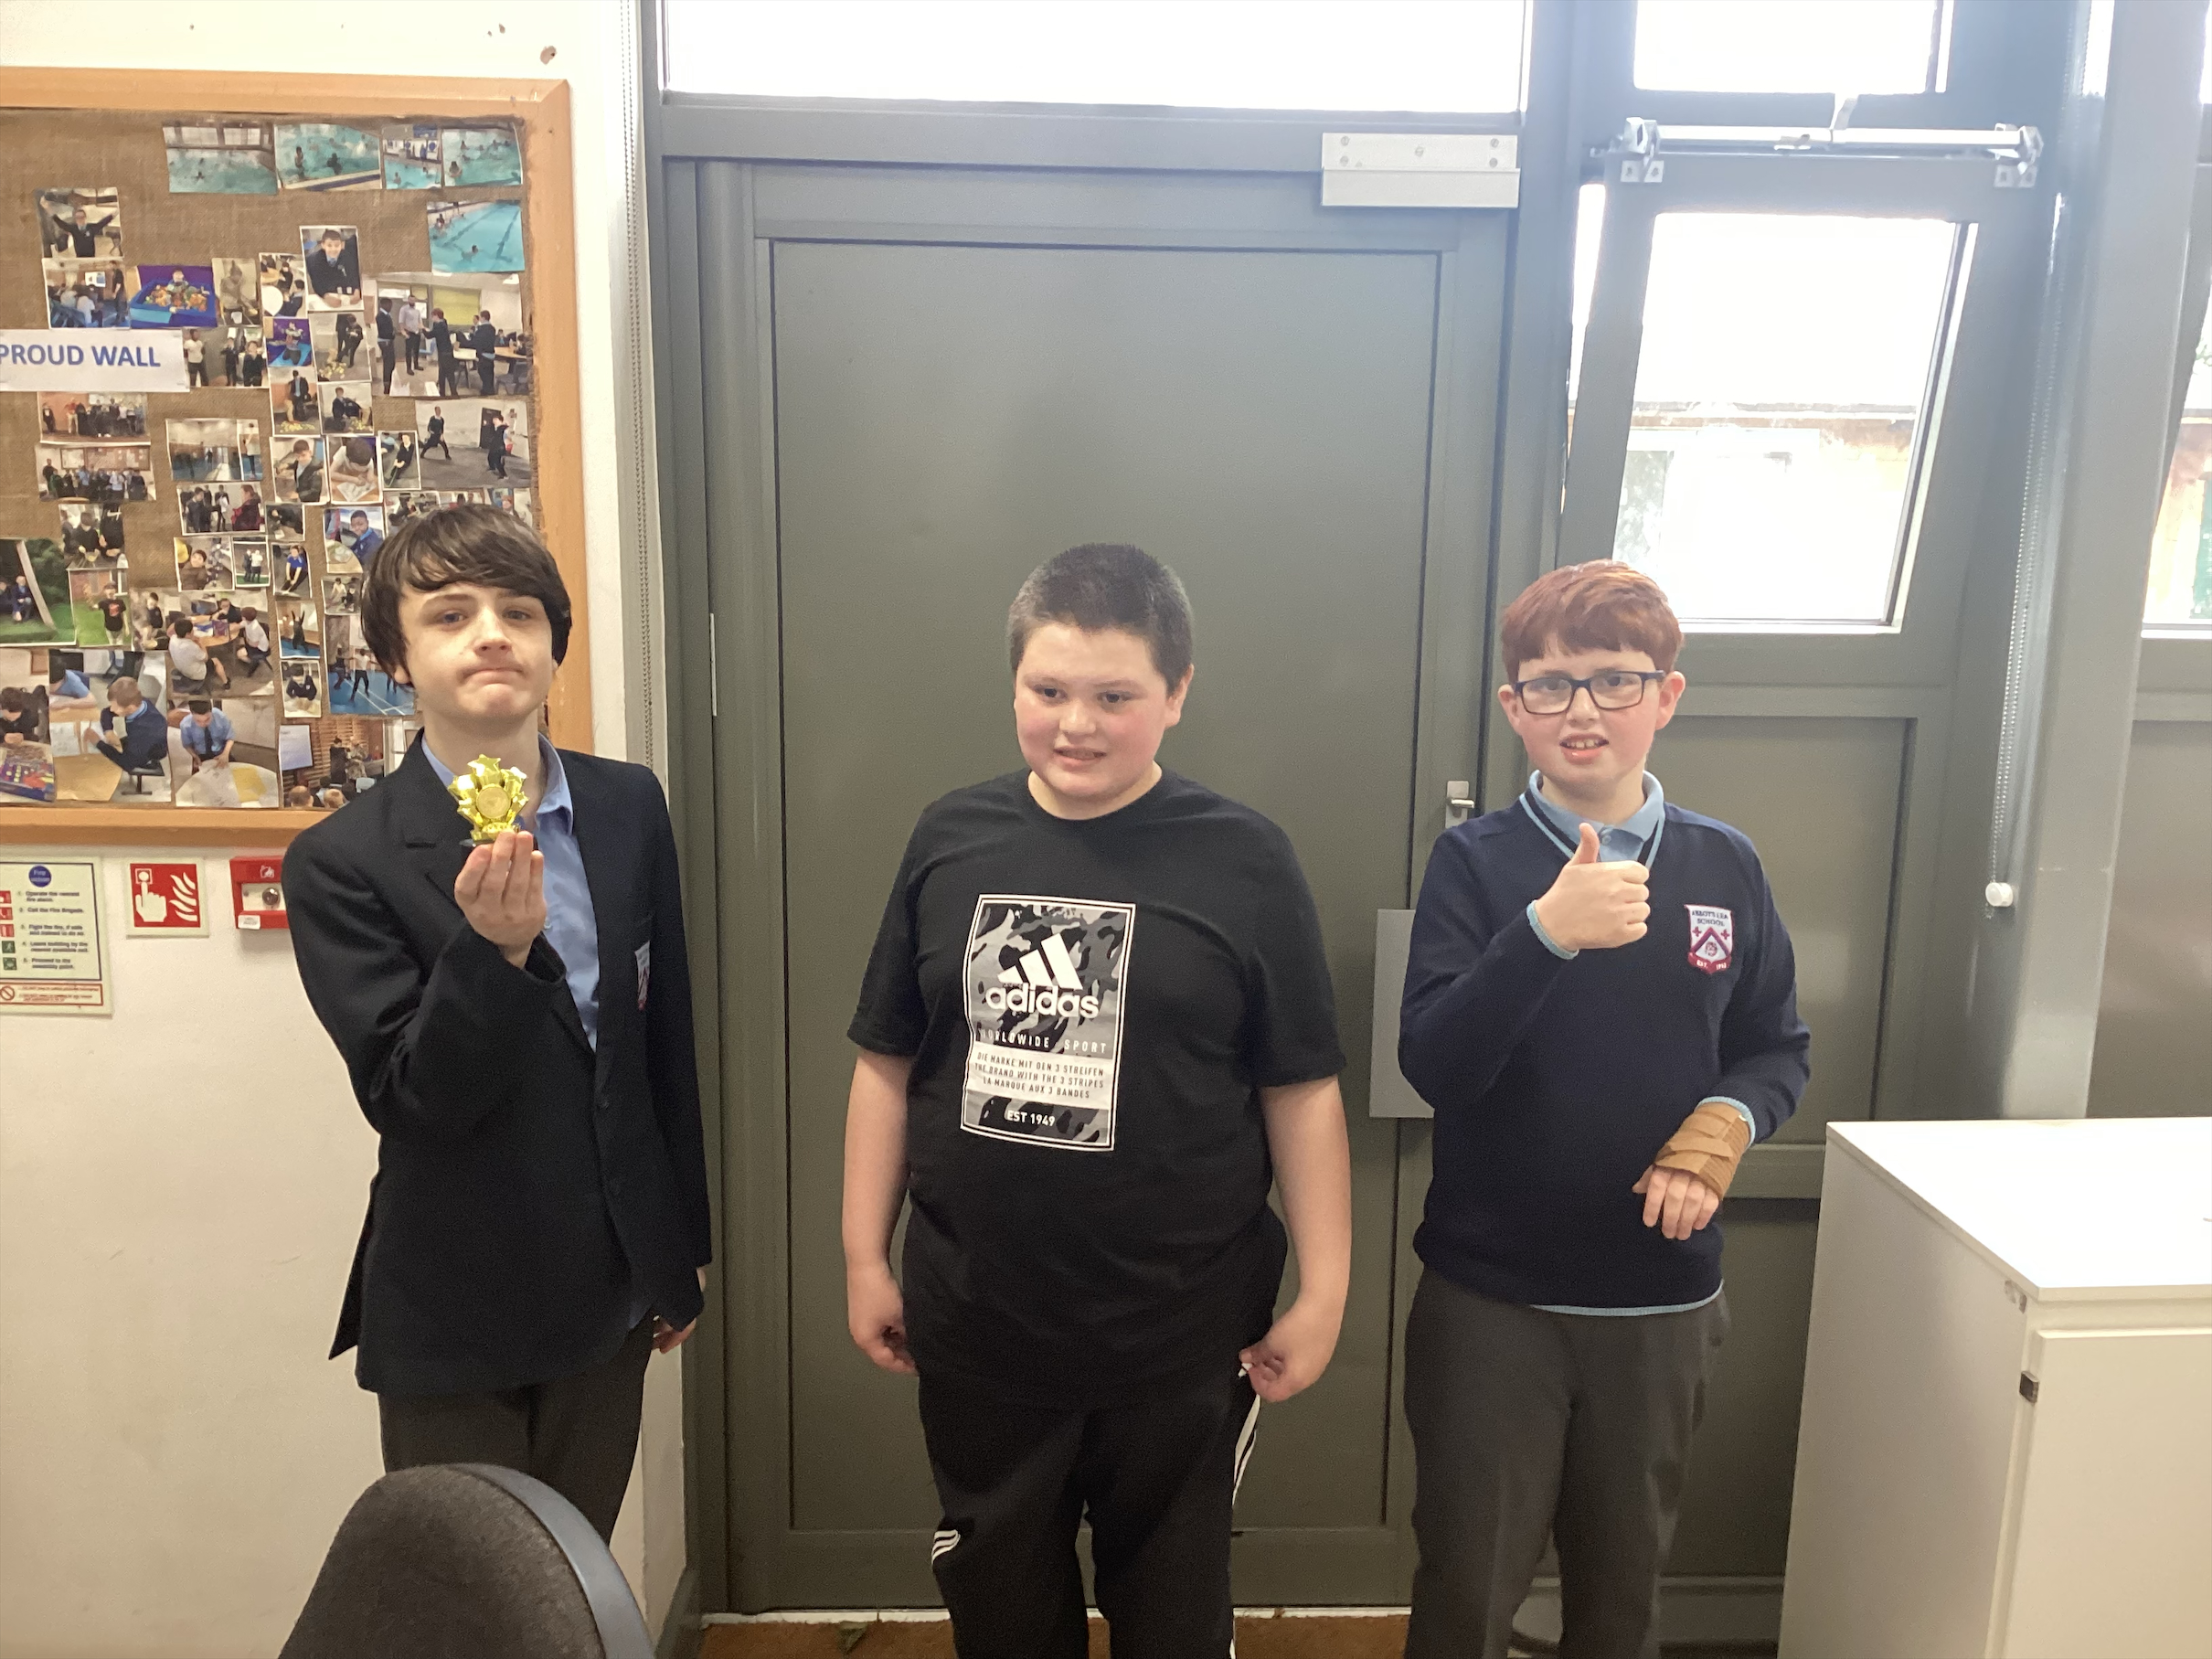 Abbot's Lea School students win award for anti-cyberbullying video